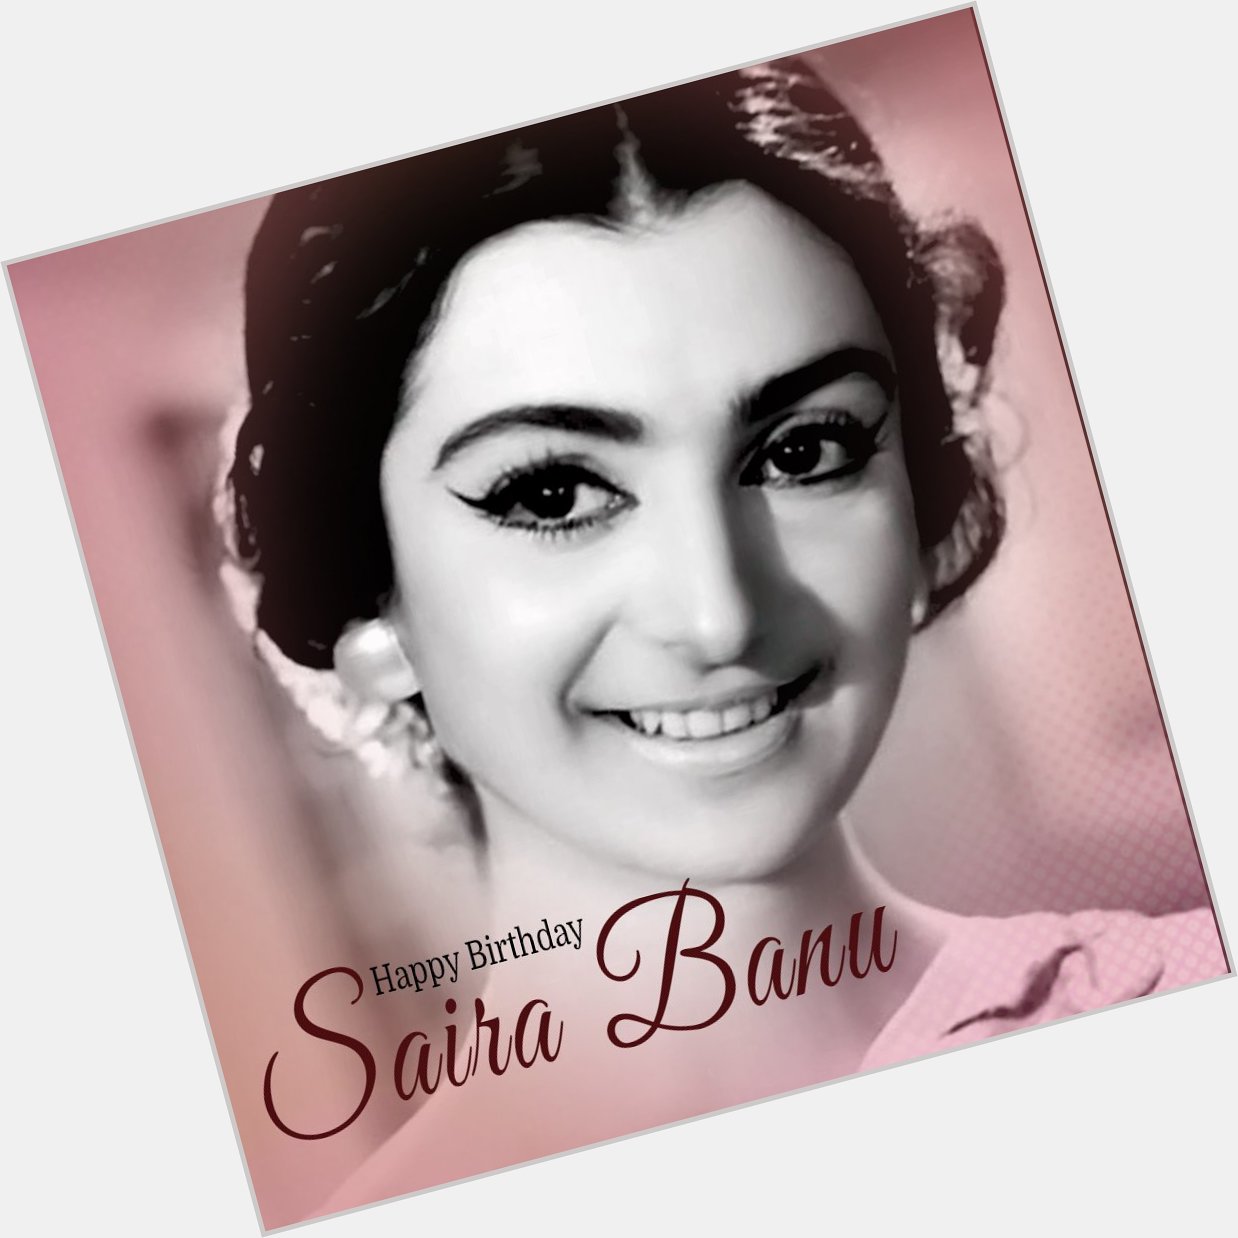 Wishing the evergreen actress Saira Banu a very Happy Birthday!  